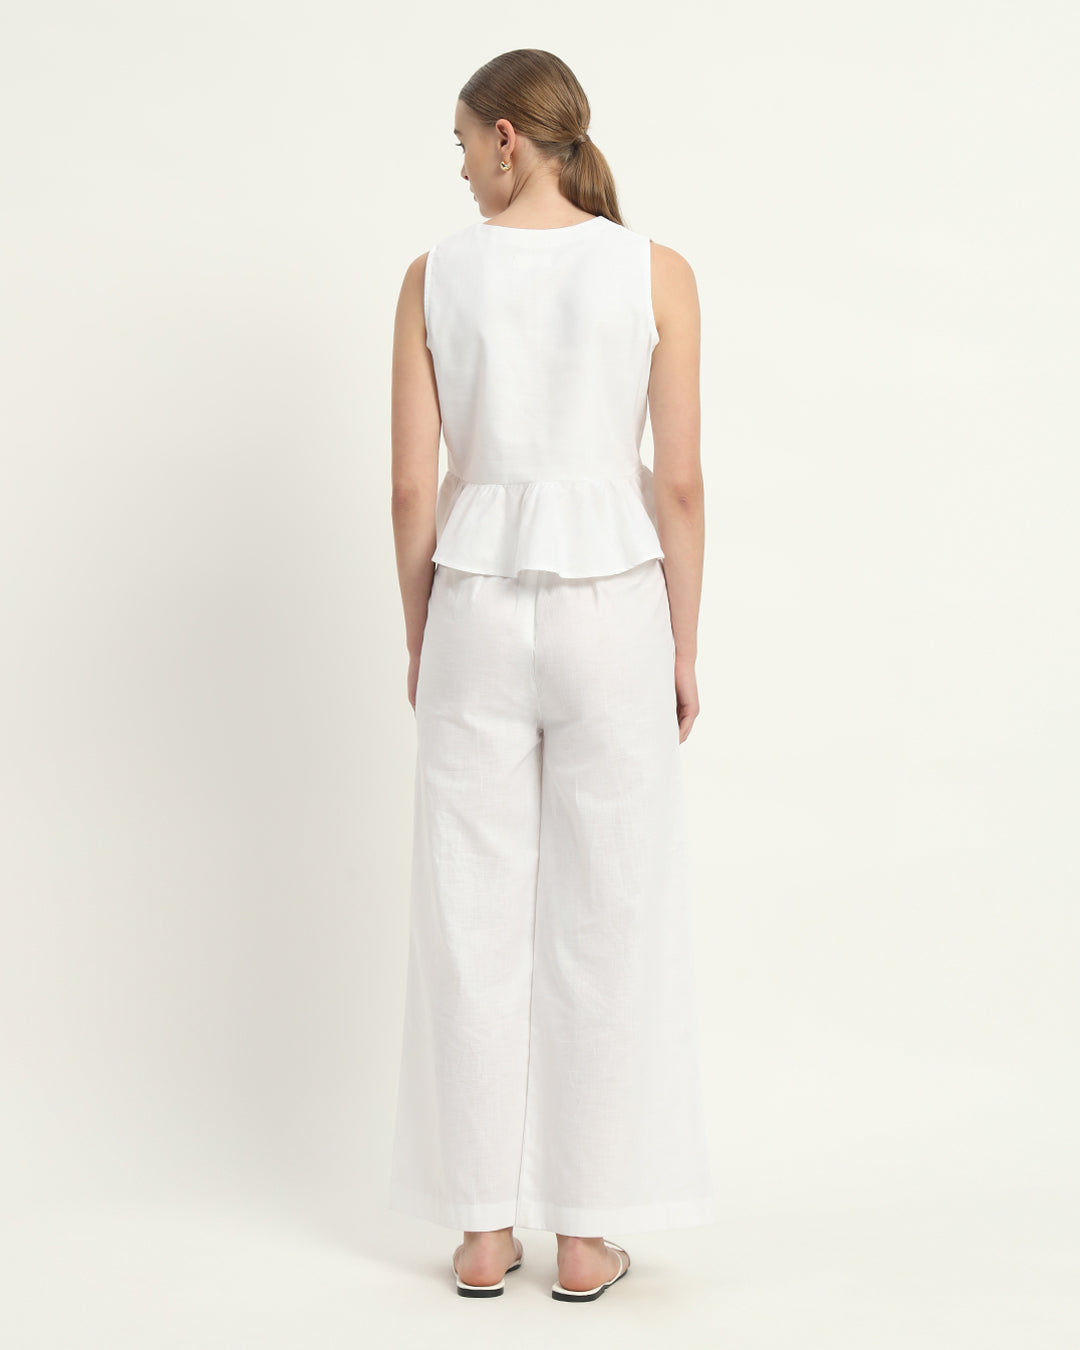 Pants Matching Set White Linen Posh Peplum V Neck